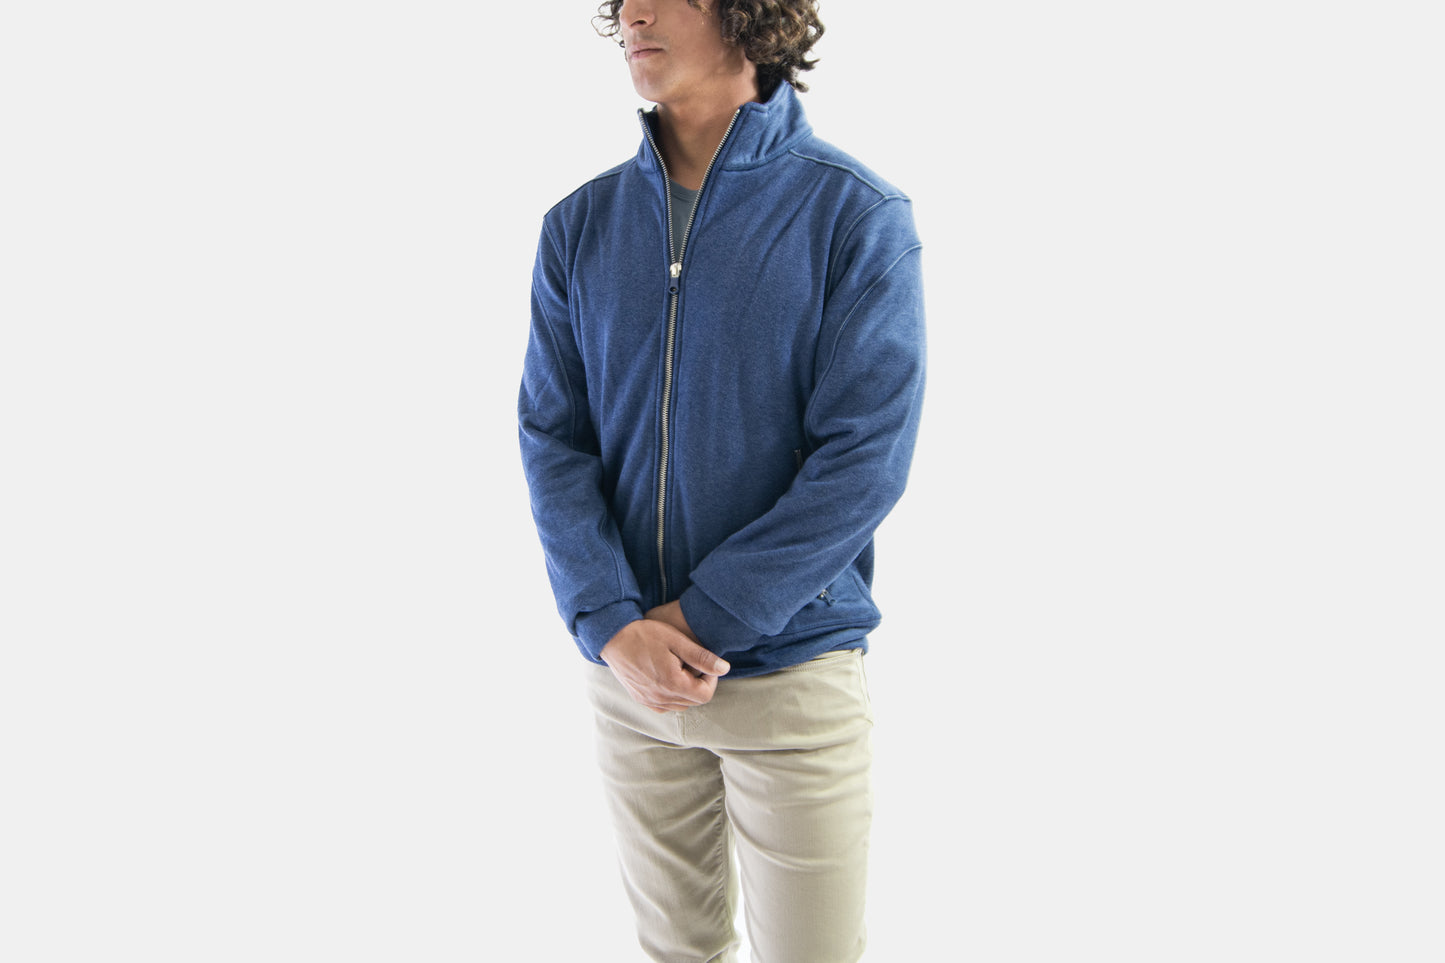 khakis of Carmel - navy zip up jacket